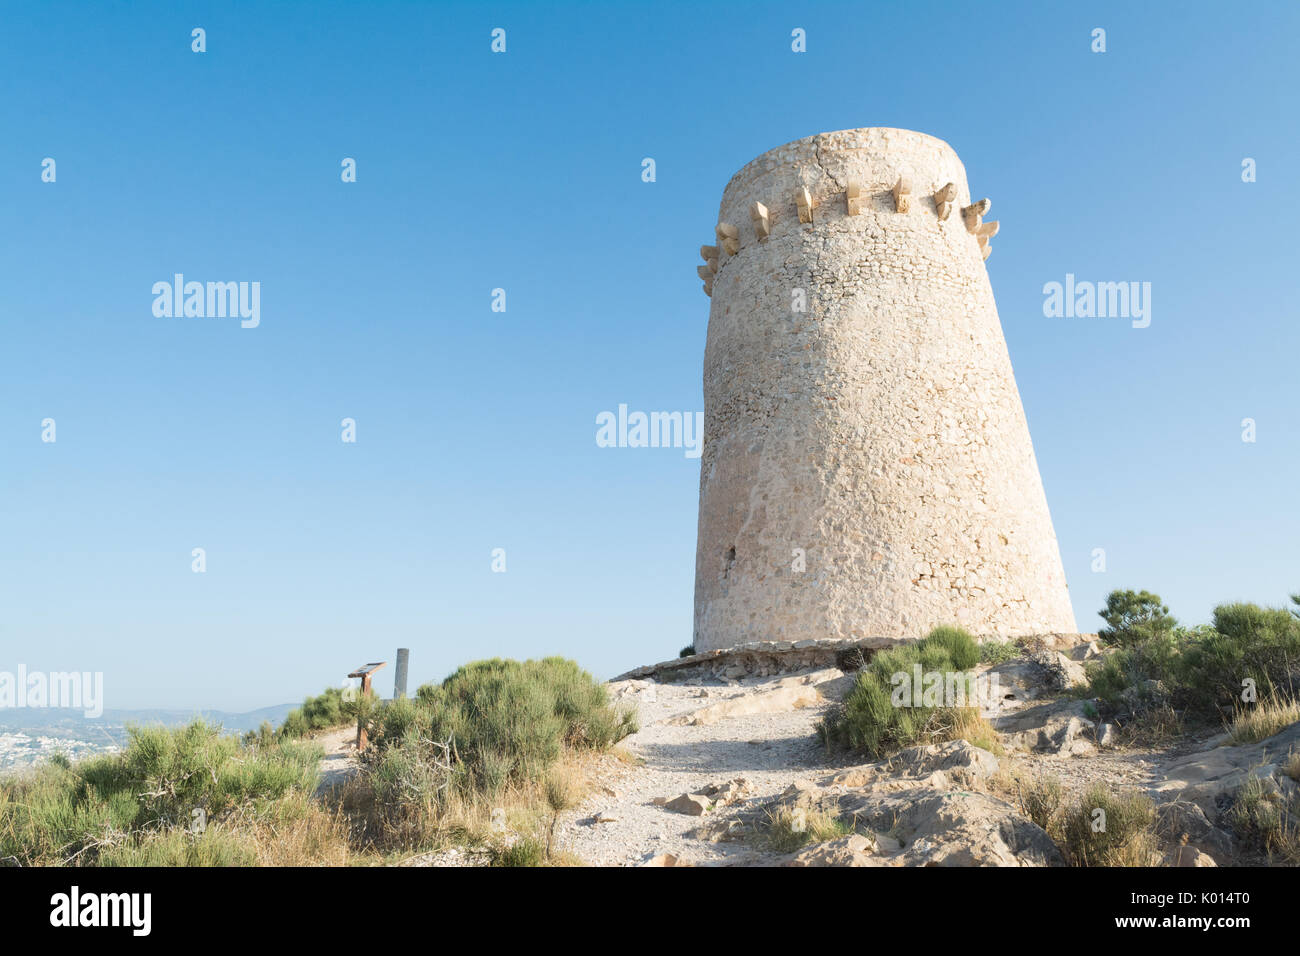 El Portet Moraira - Guet Torre Vigia Cap d'Or, Moraira - Connu localement comme le Pepperpot, Alicante, Costa Blanca, Espagne Banque D'Images